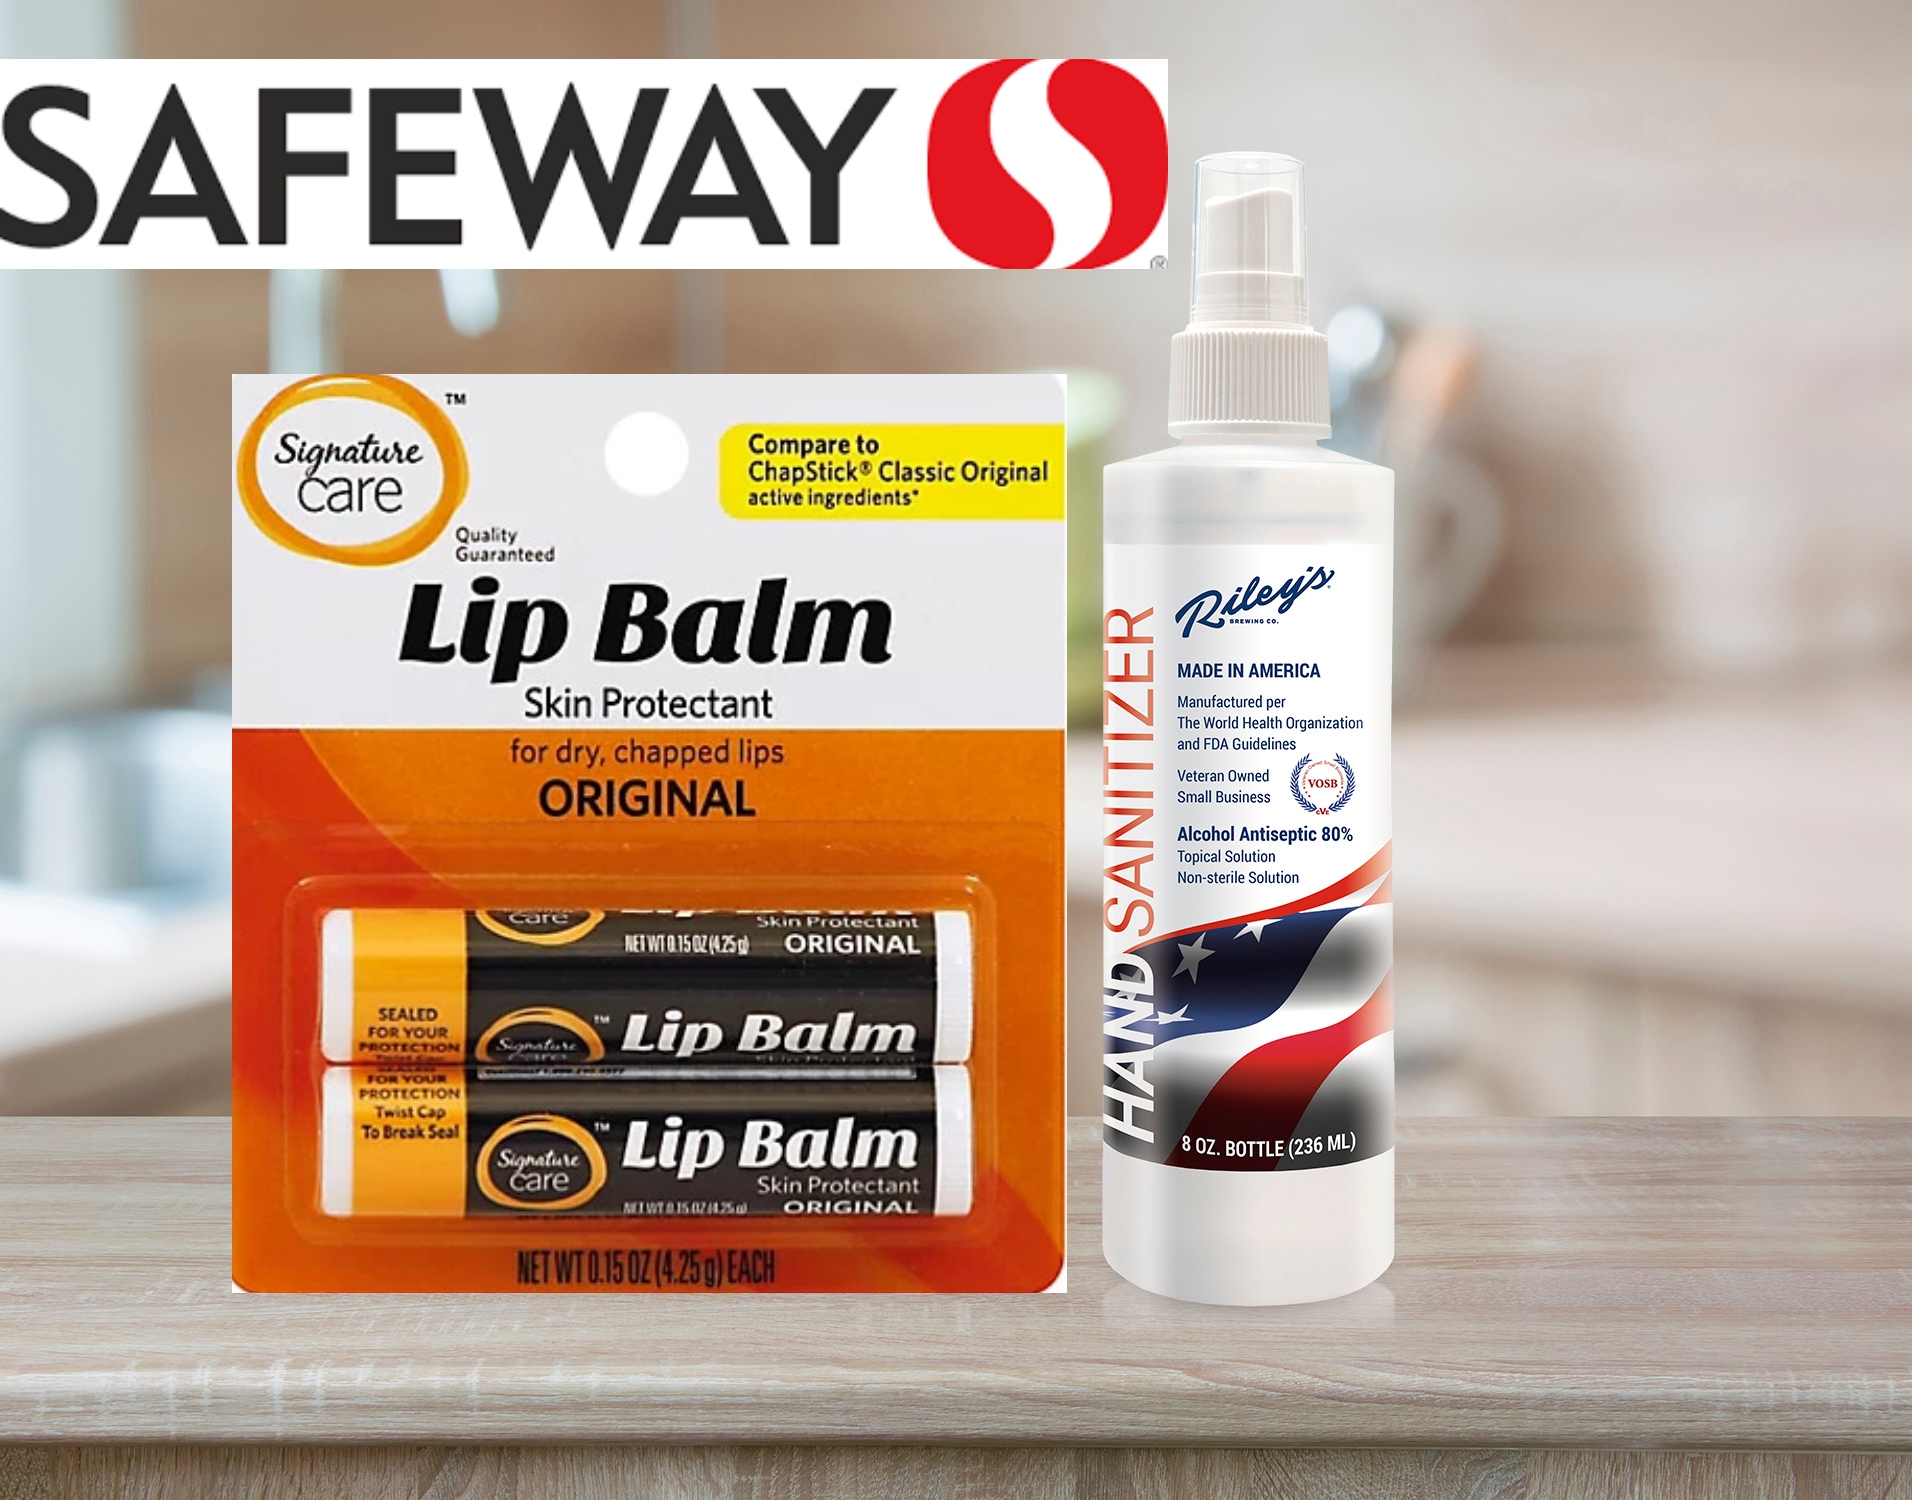 FREE Signature Care Lip Balm & Riley’s Hand Sanitizer at Safeway